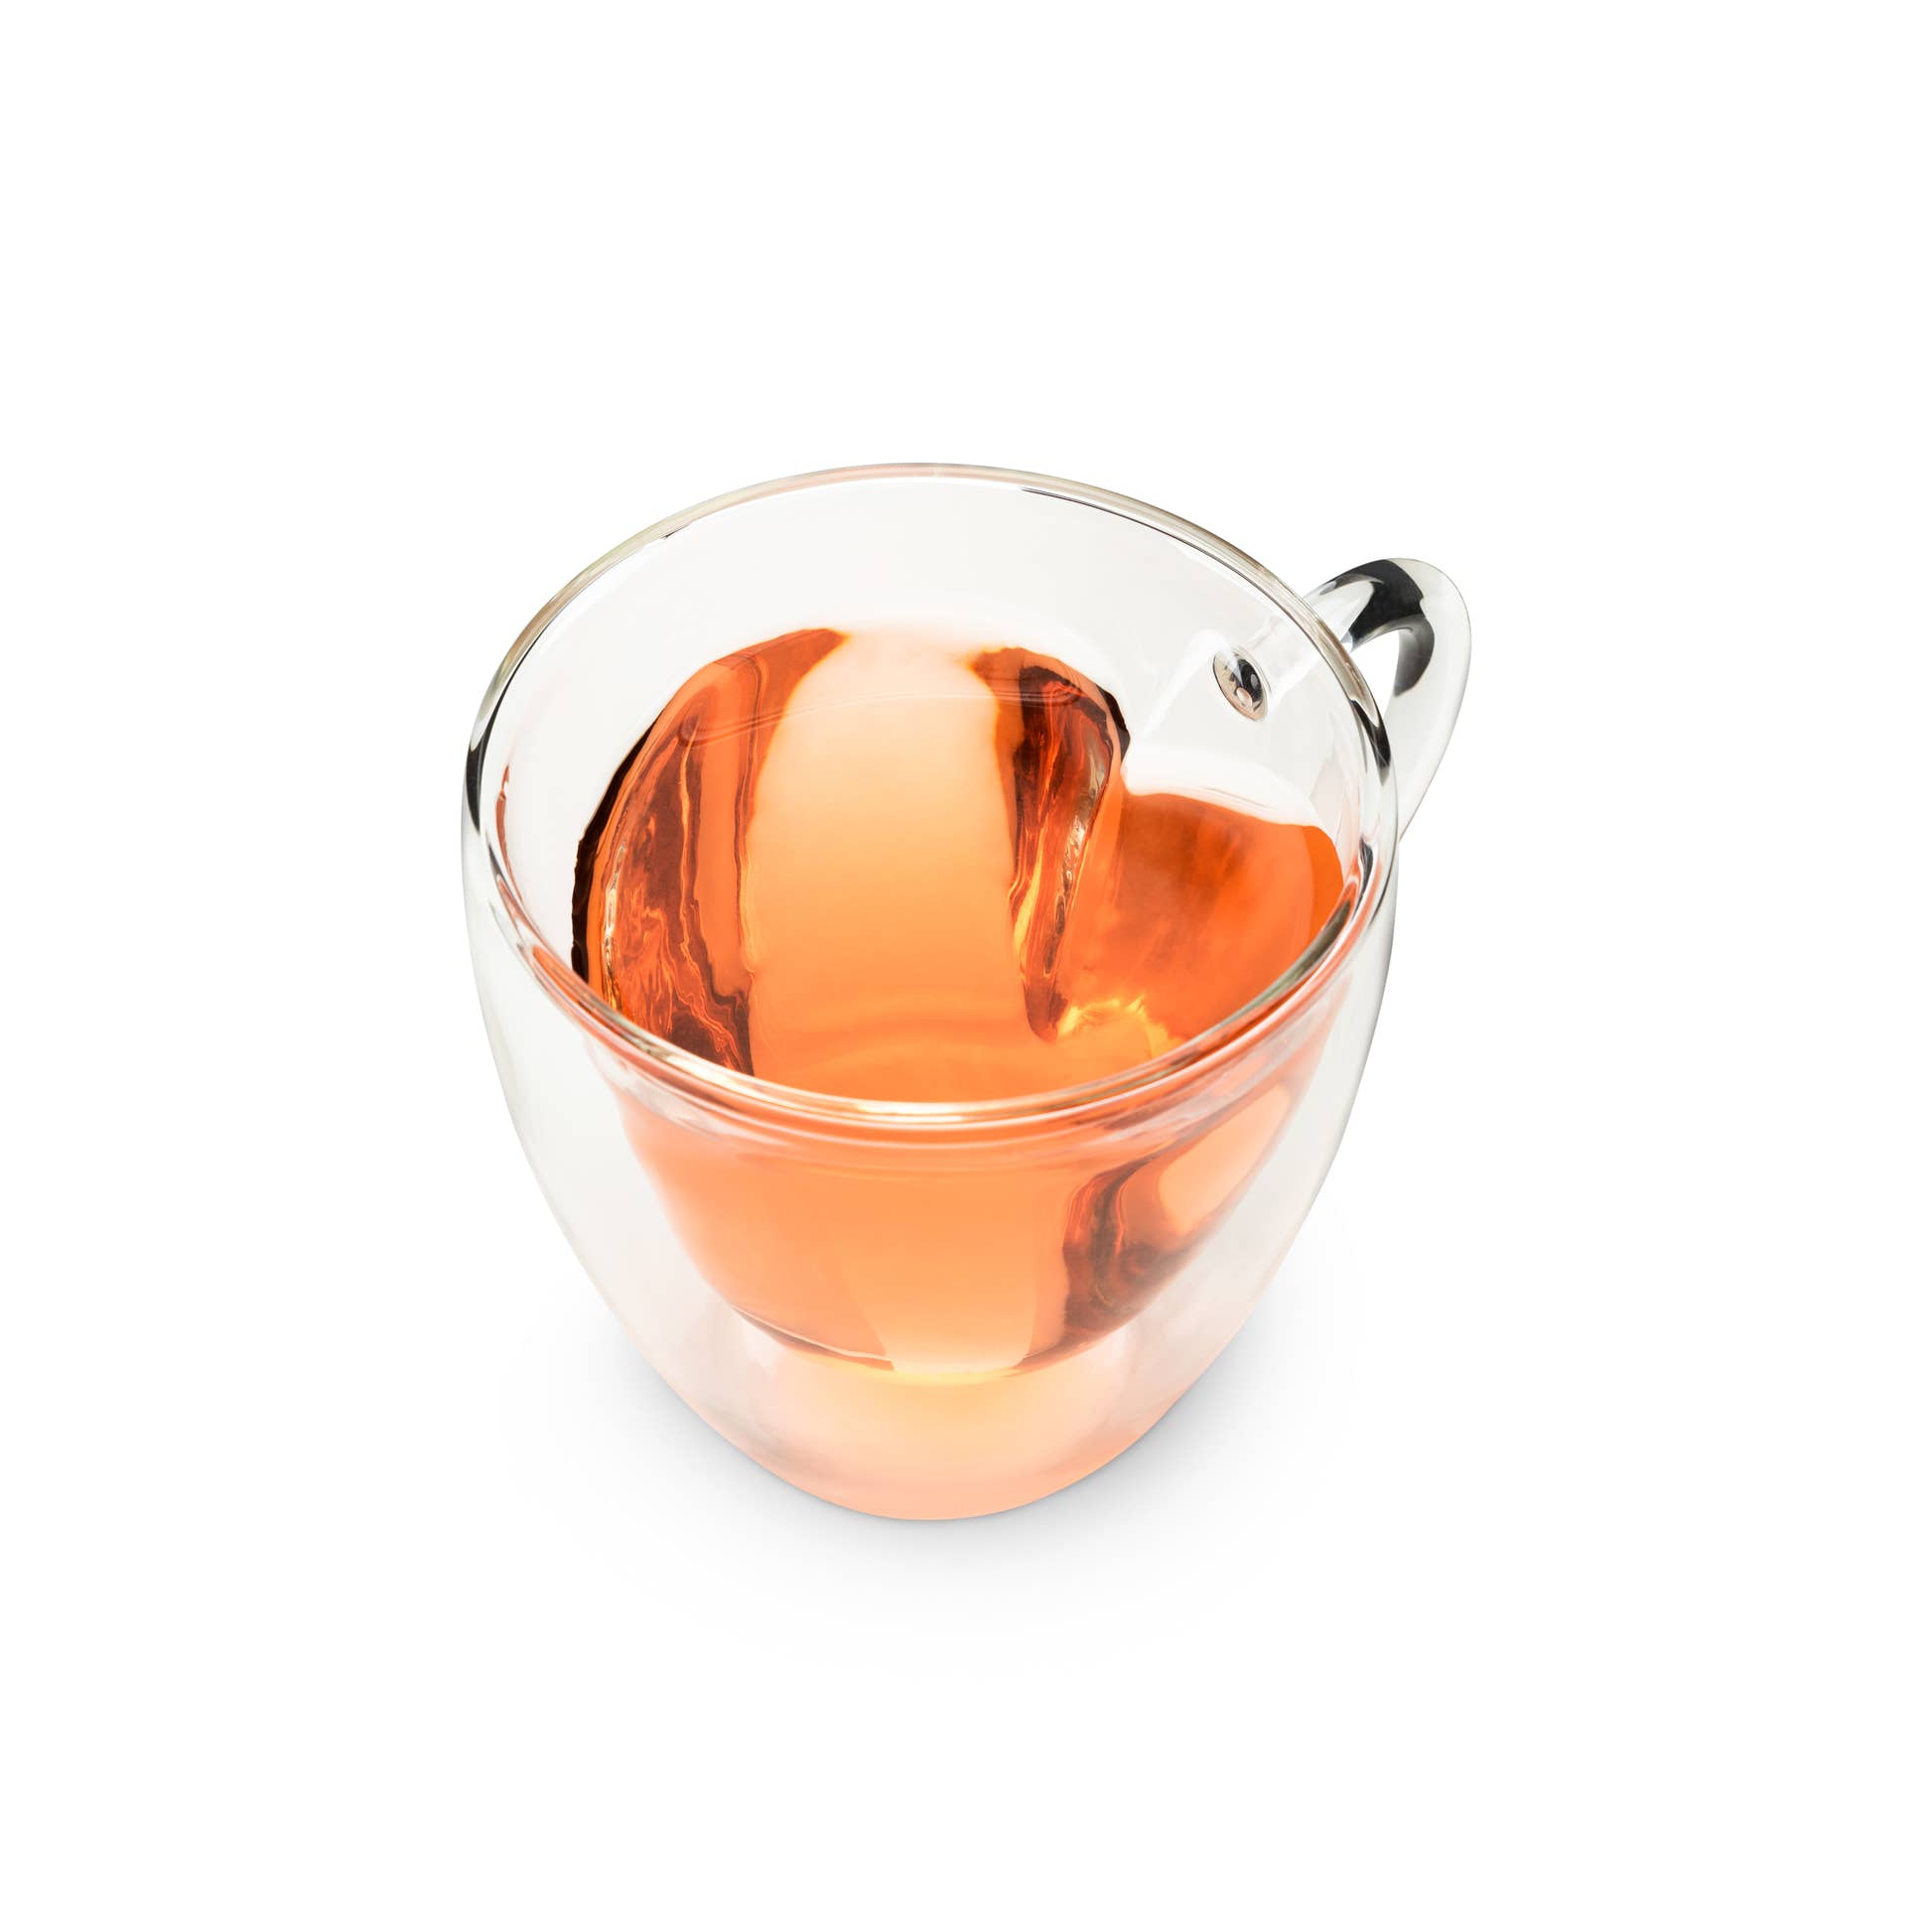 Double-walled glass heart mug with tea